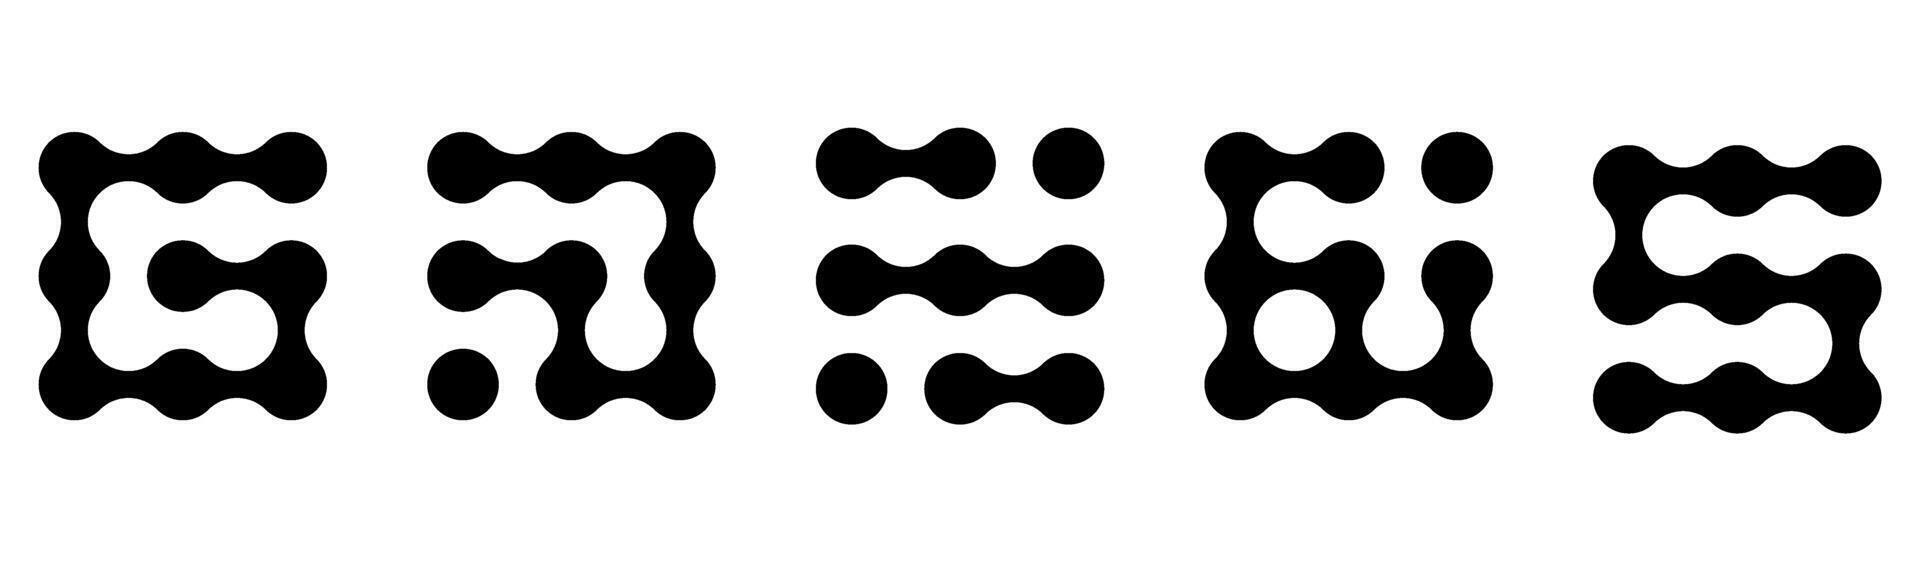 Set of connected black dots. Transition metaballs. Integration symbol. Circles pattern vector